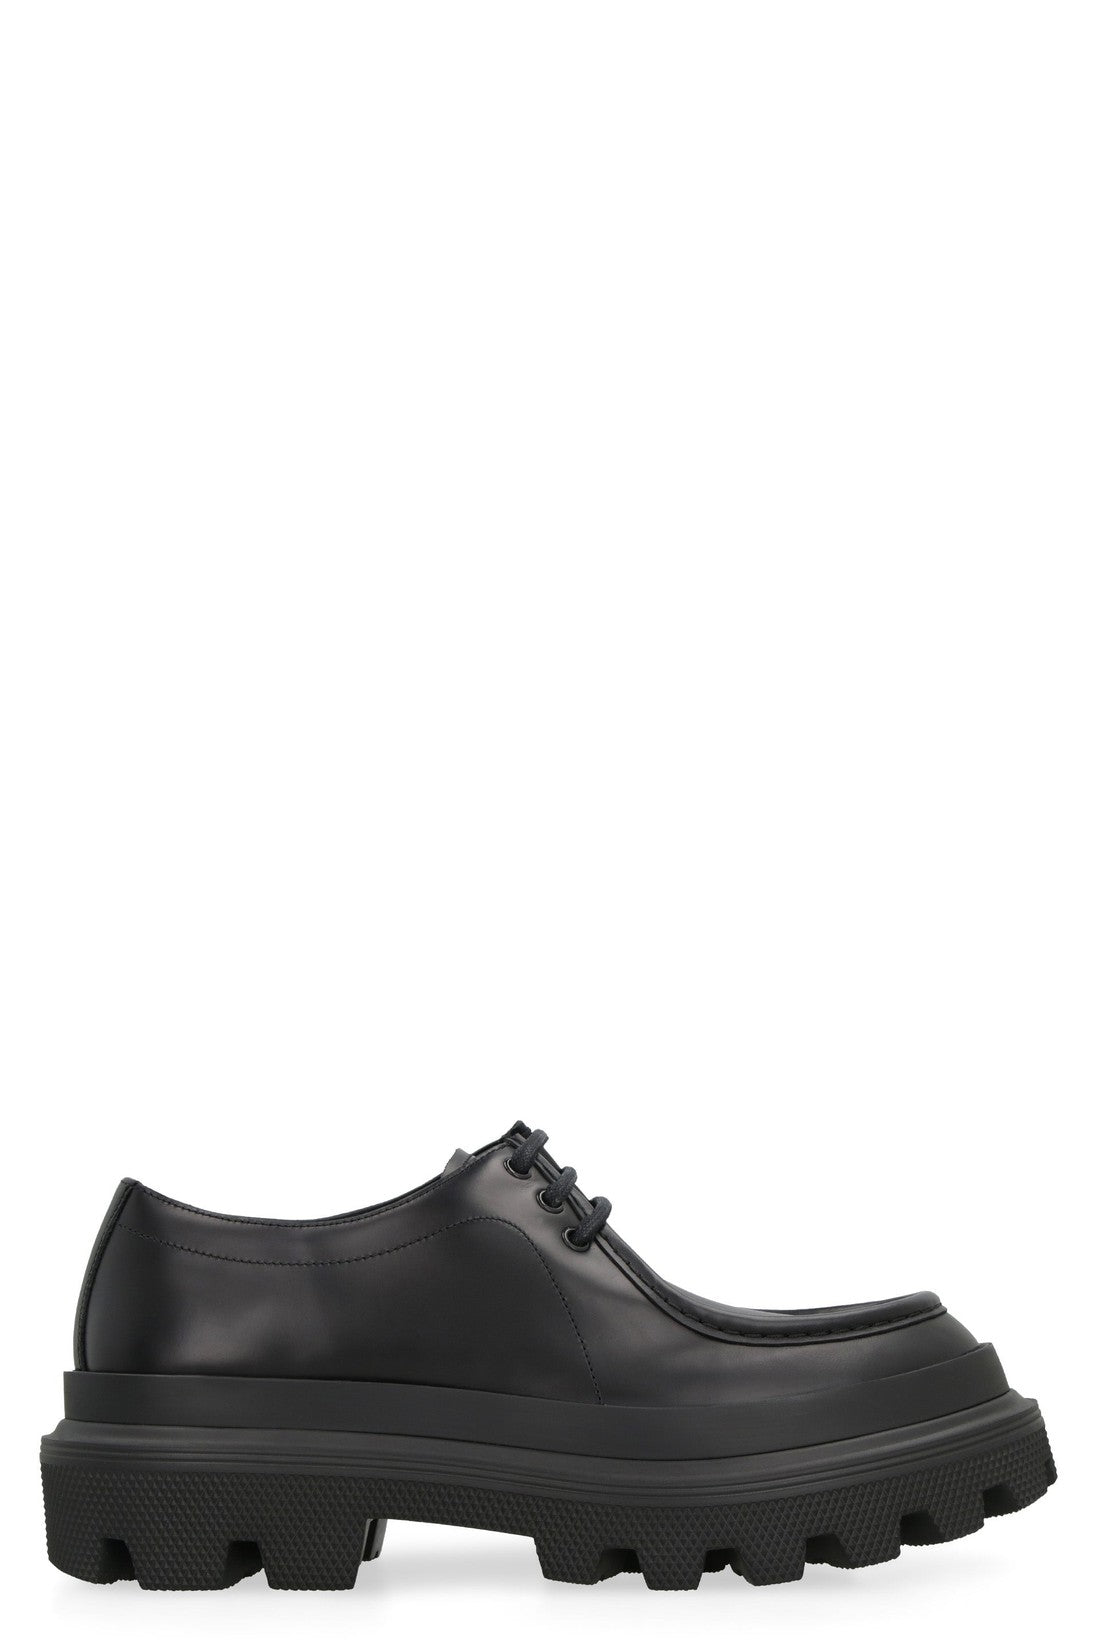 Dolce & Gabbana-OUTLET-SALE-Derby leather shoes-ARCHIVIST